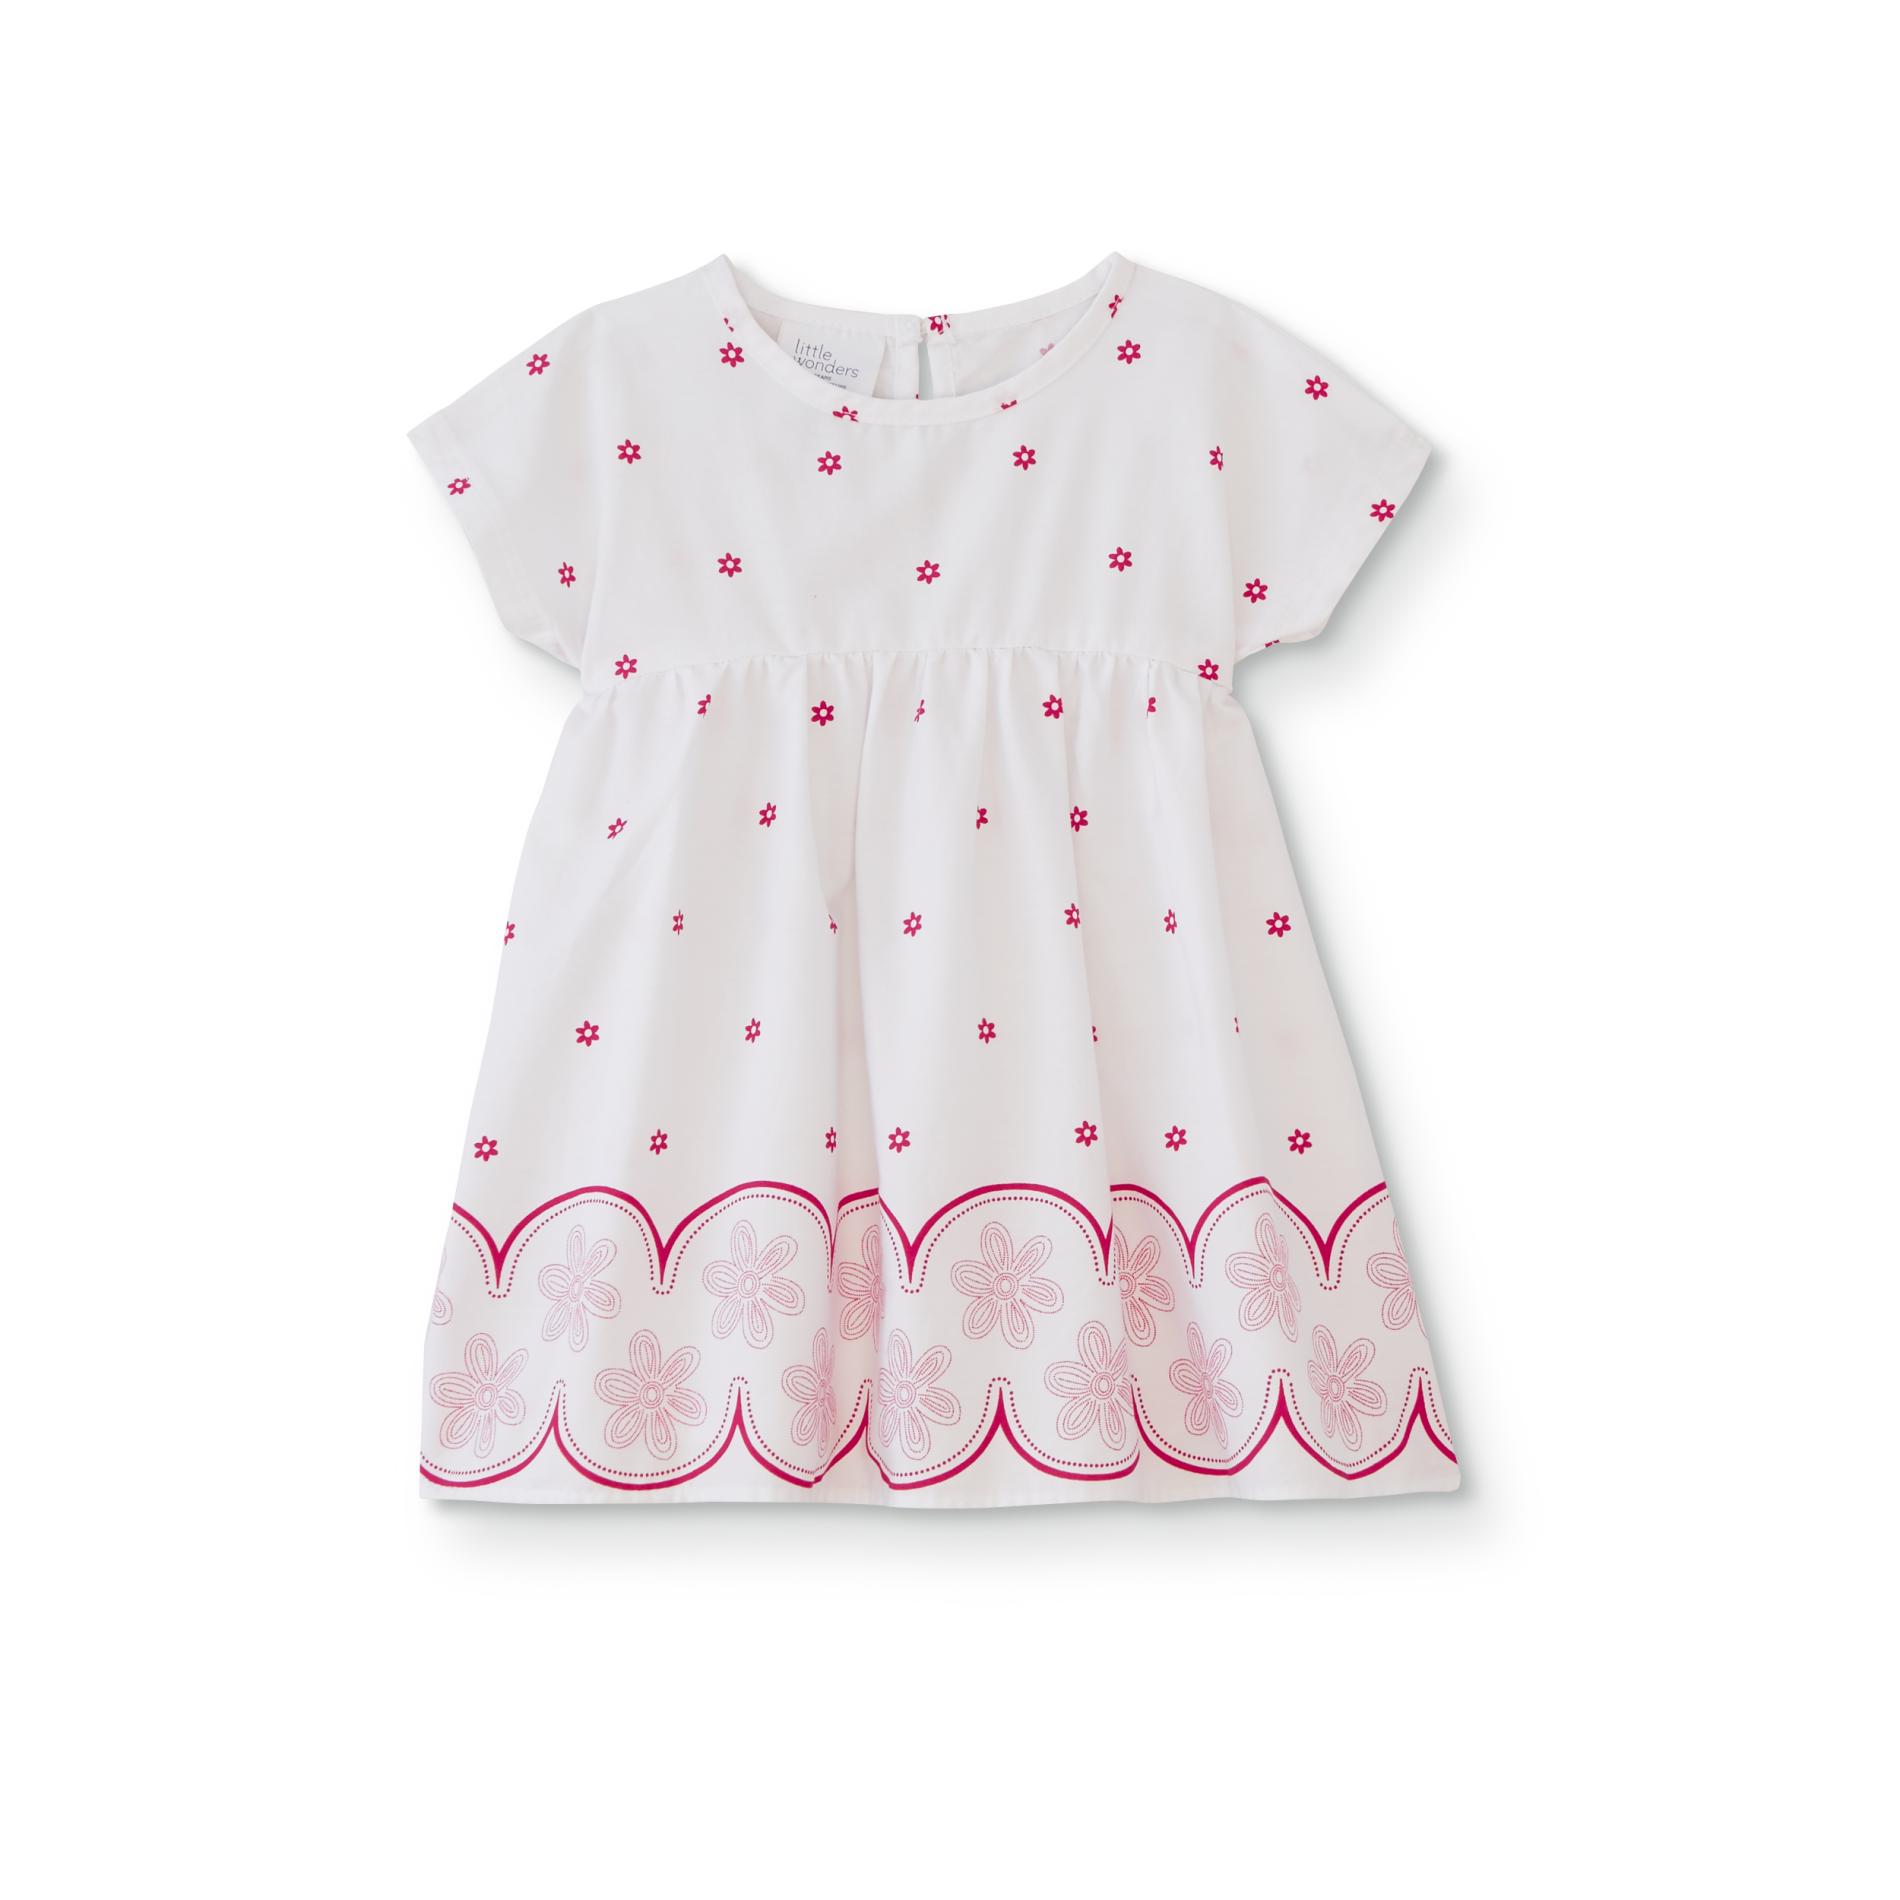 Little Wonders Infant Girls' T-Shirt Dress - Floral